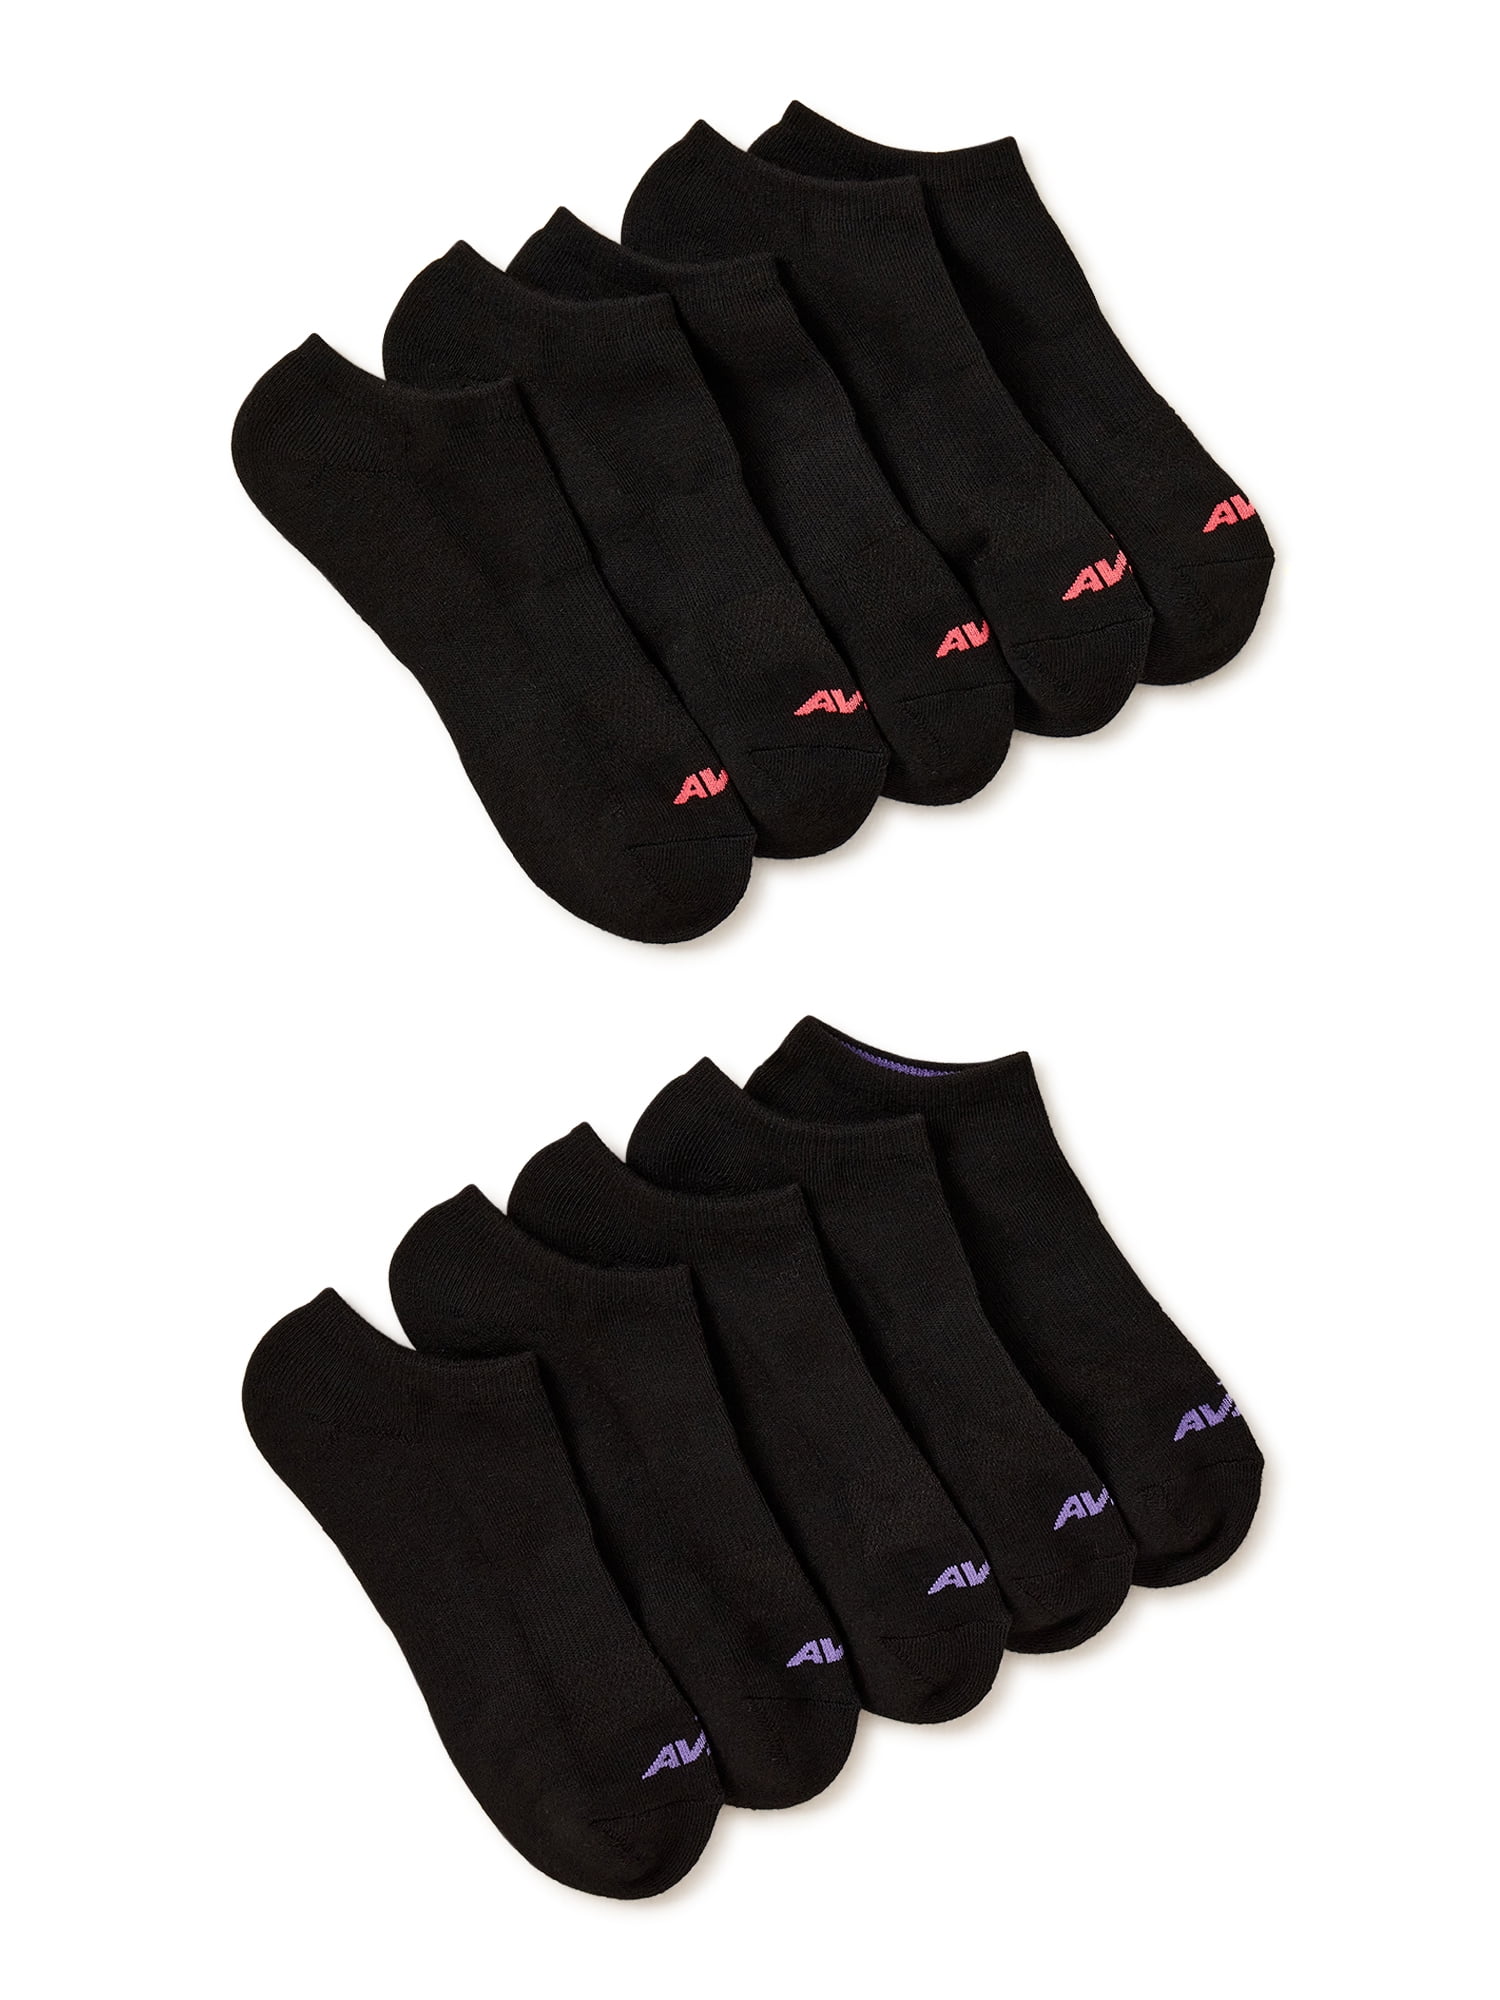 Avia Women's Performance Cushioned Low Cut Socks, 10-Pack